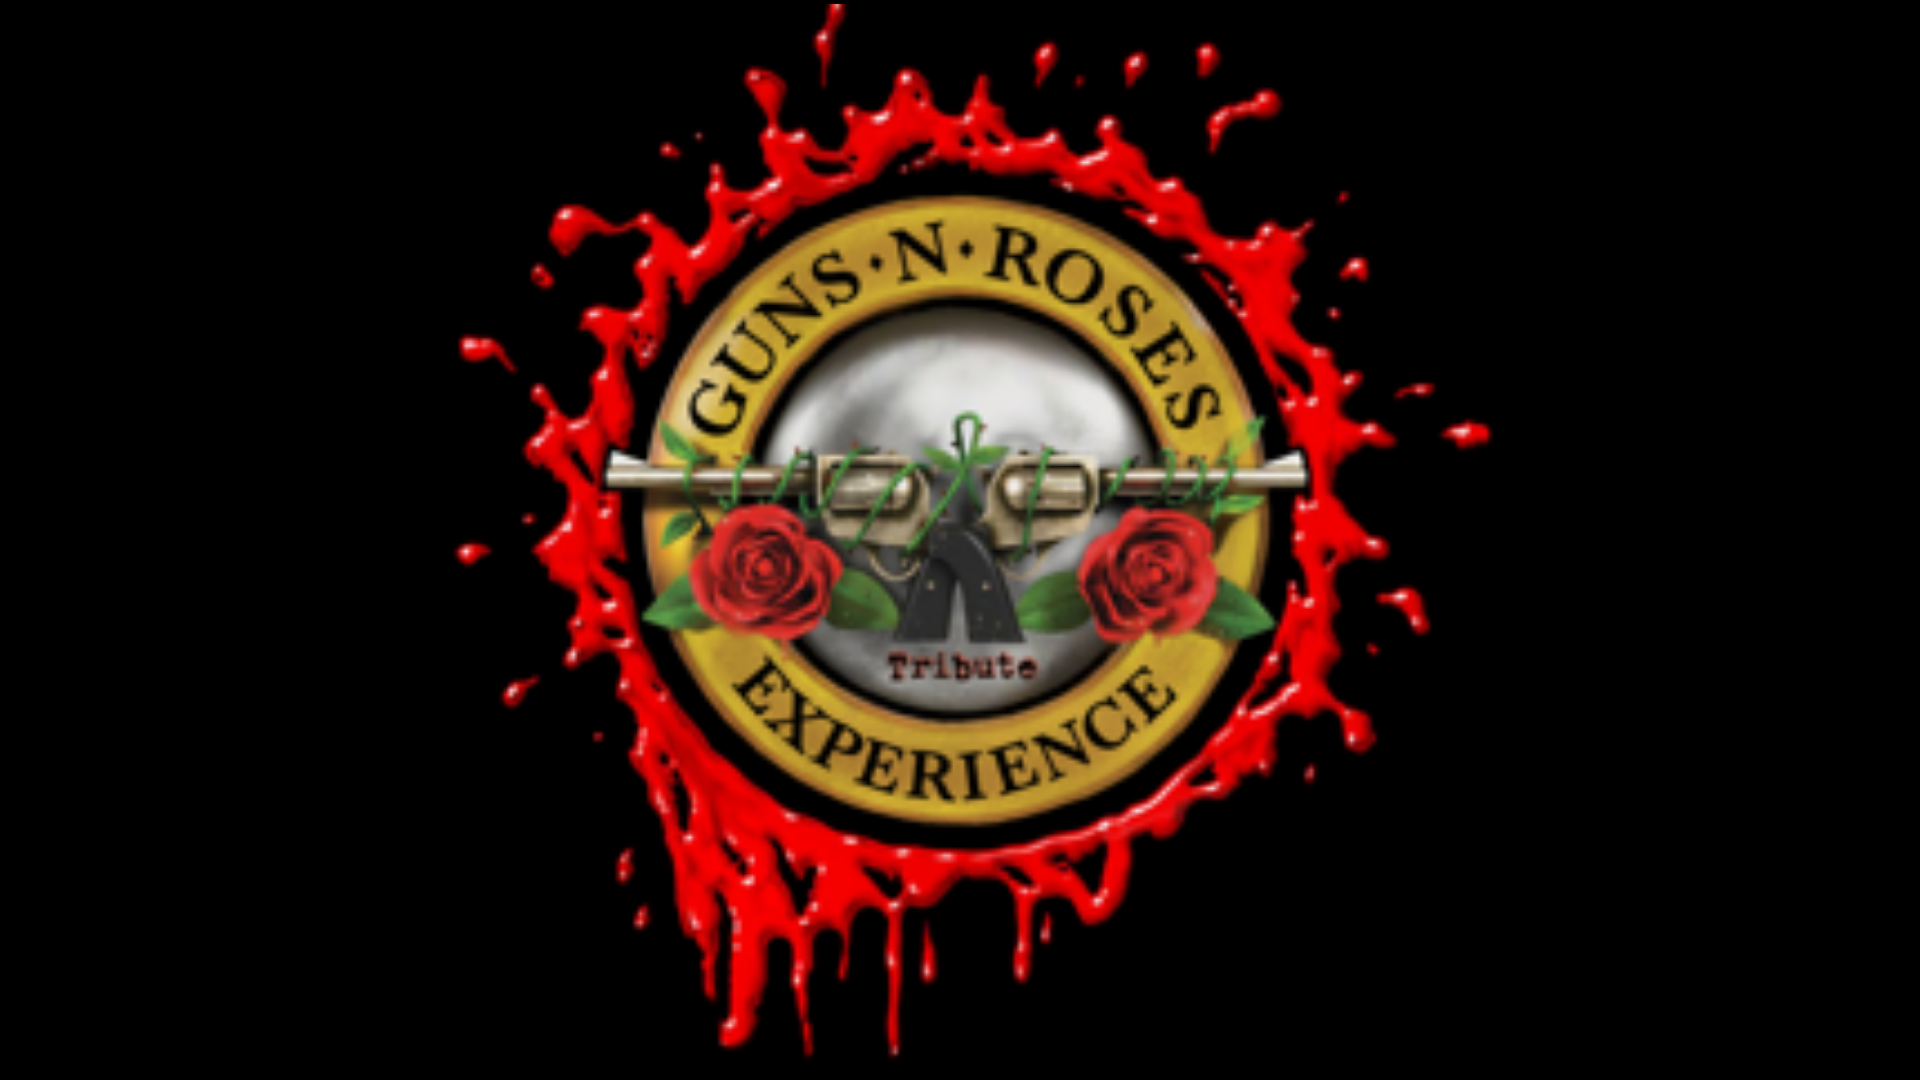 Guns n Roses Experience (Tribute to Guns n Roses) - hero